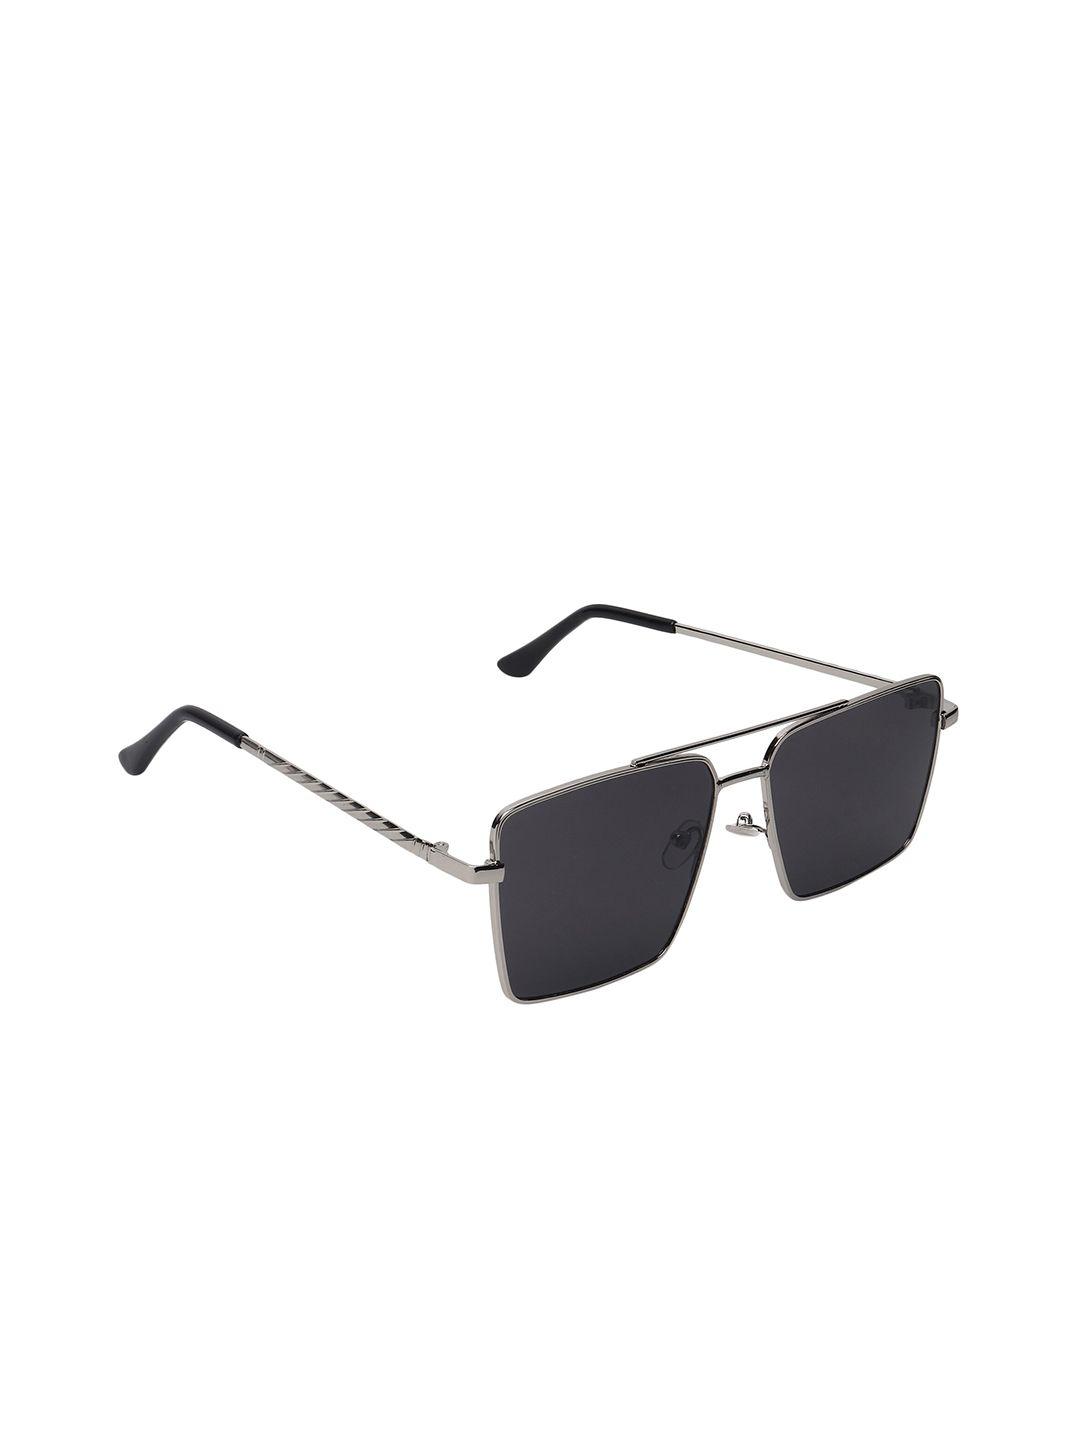 aligatorr unisex black lens & silver-toned wayfarer sunglasses with uv protected lens